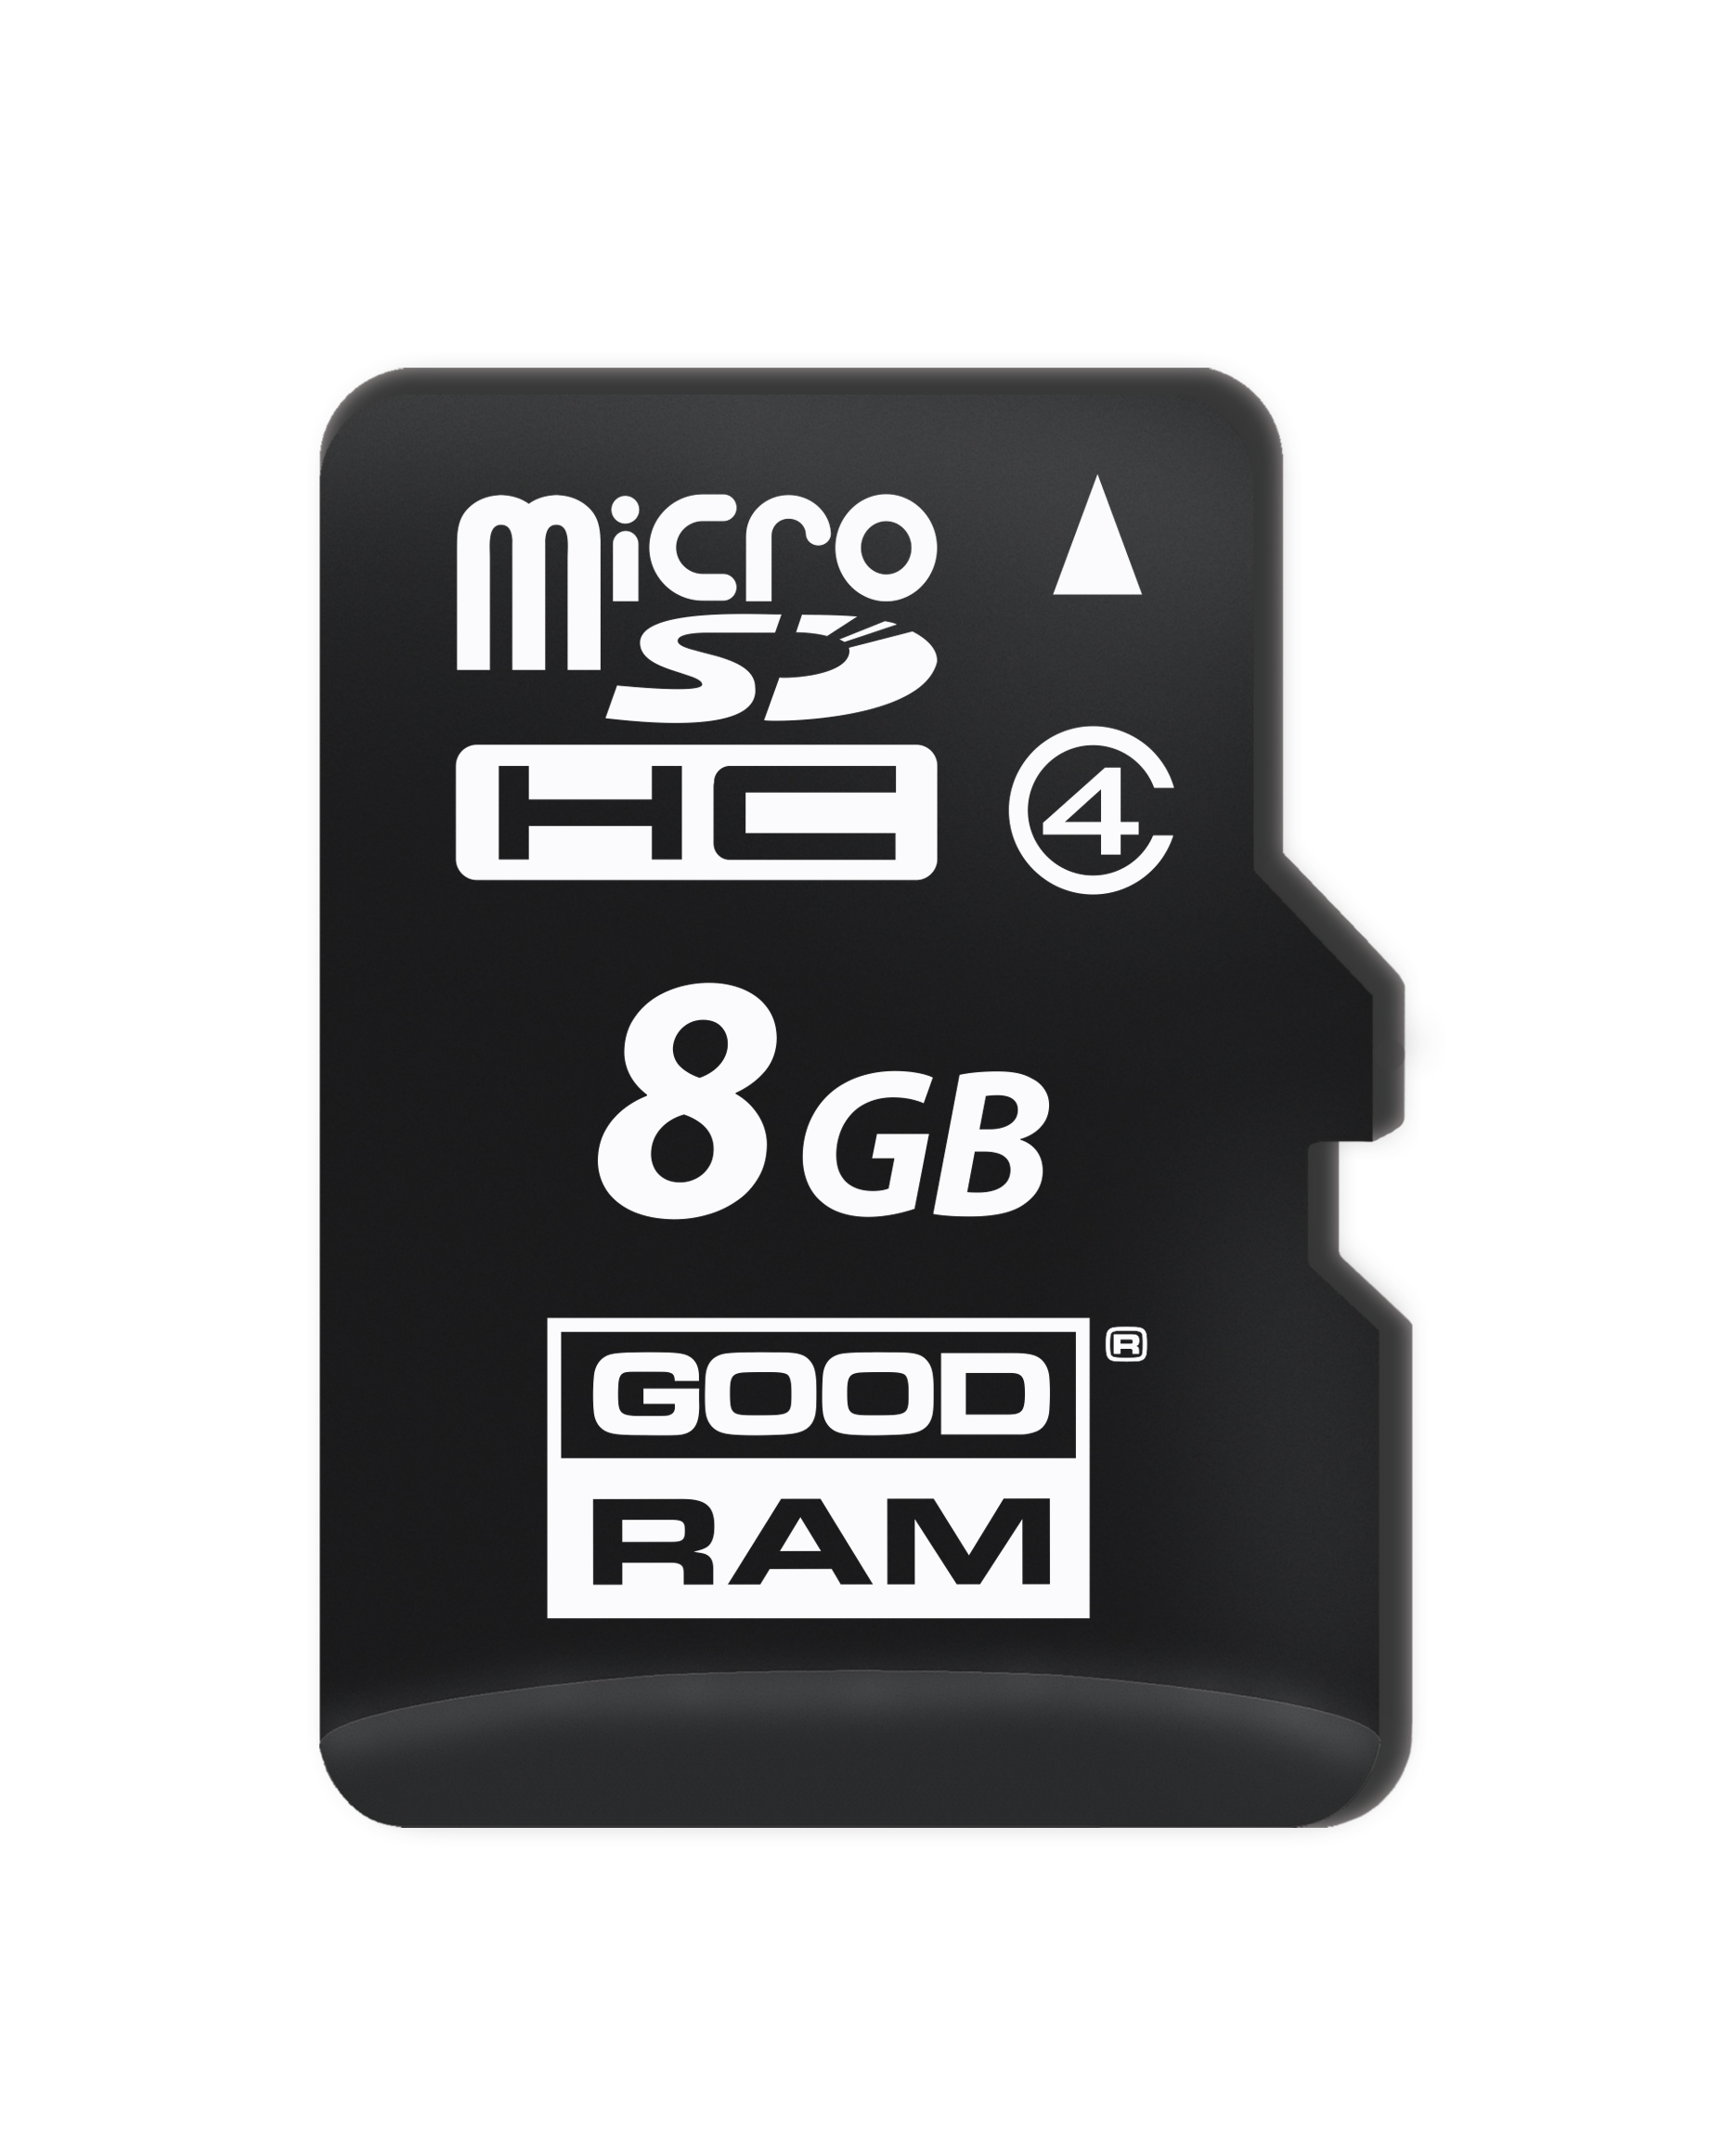 Microsdhc 1. 128gb Gщщв Rфьь карта памяти MICROSD. Карта памяти MICROSDXC 128gb GOODRAM class 10 UHS I. Карта памяти микро SDHC SD (микро SDHC SD HC). MICROSD 32 GOODRAM.